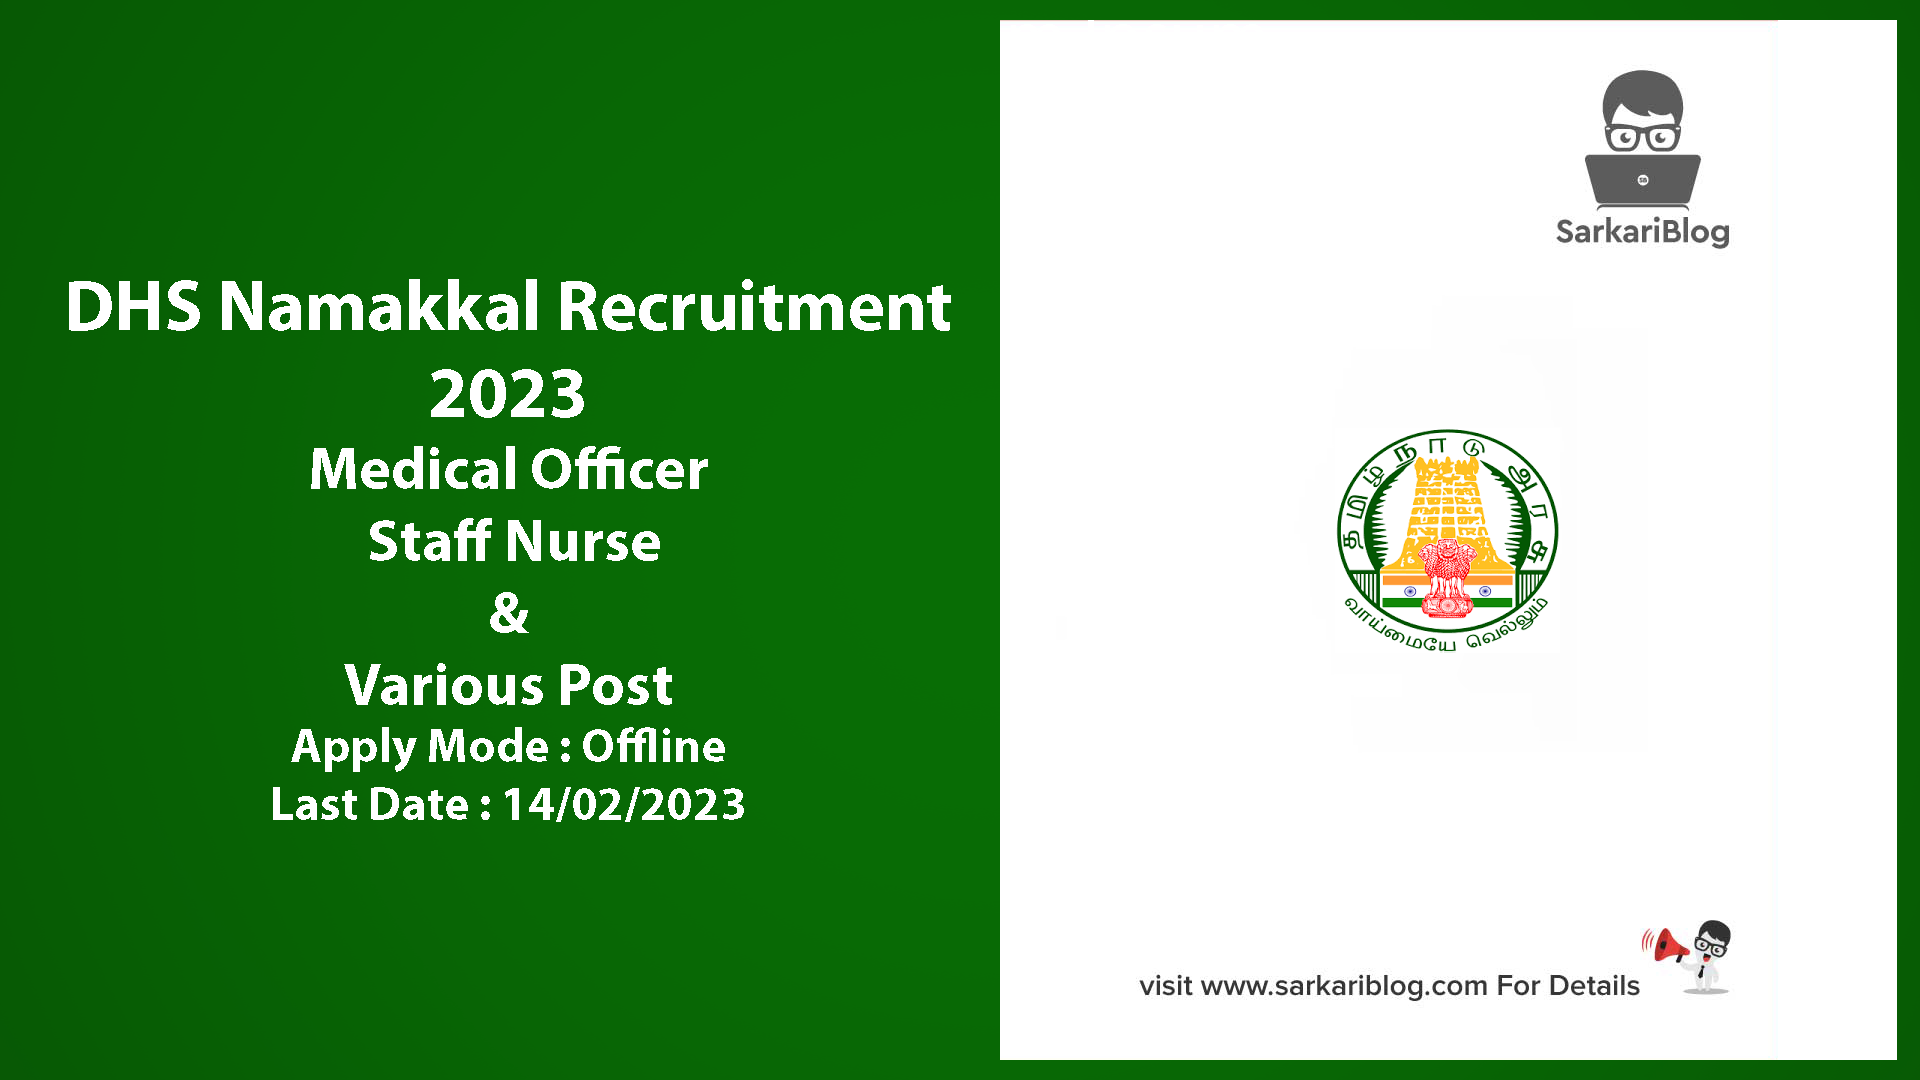 DHS Namakkal Recruitment 2023